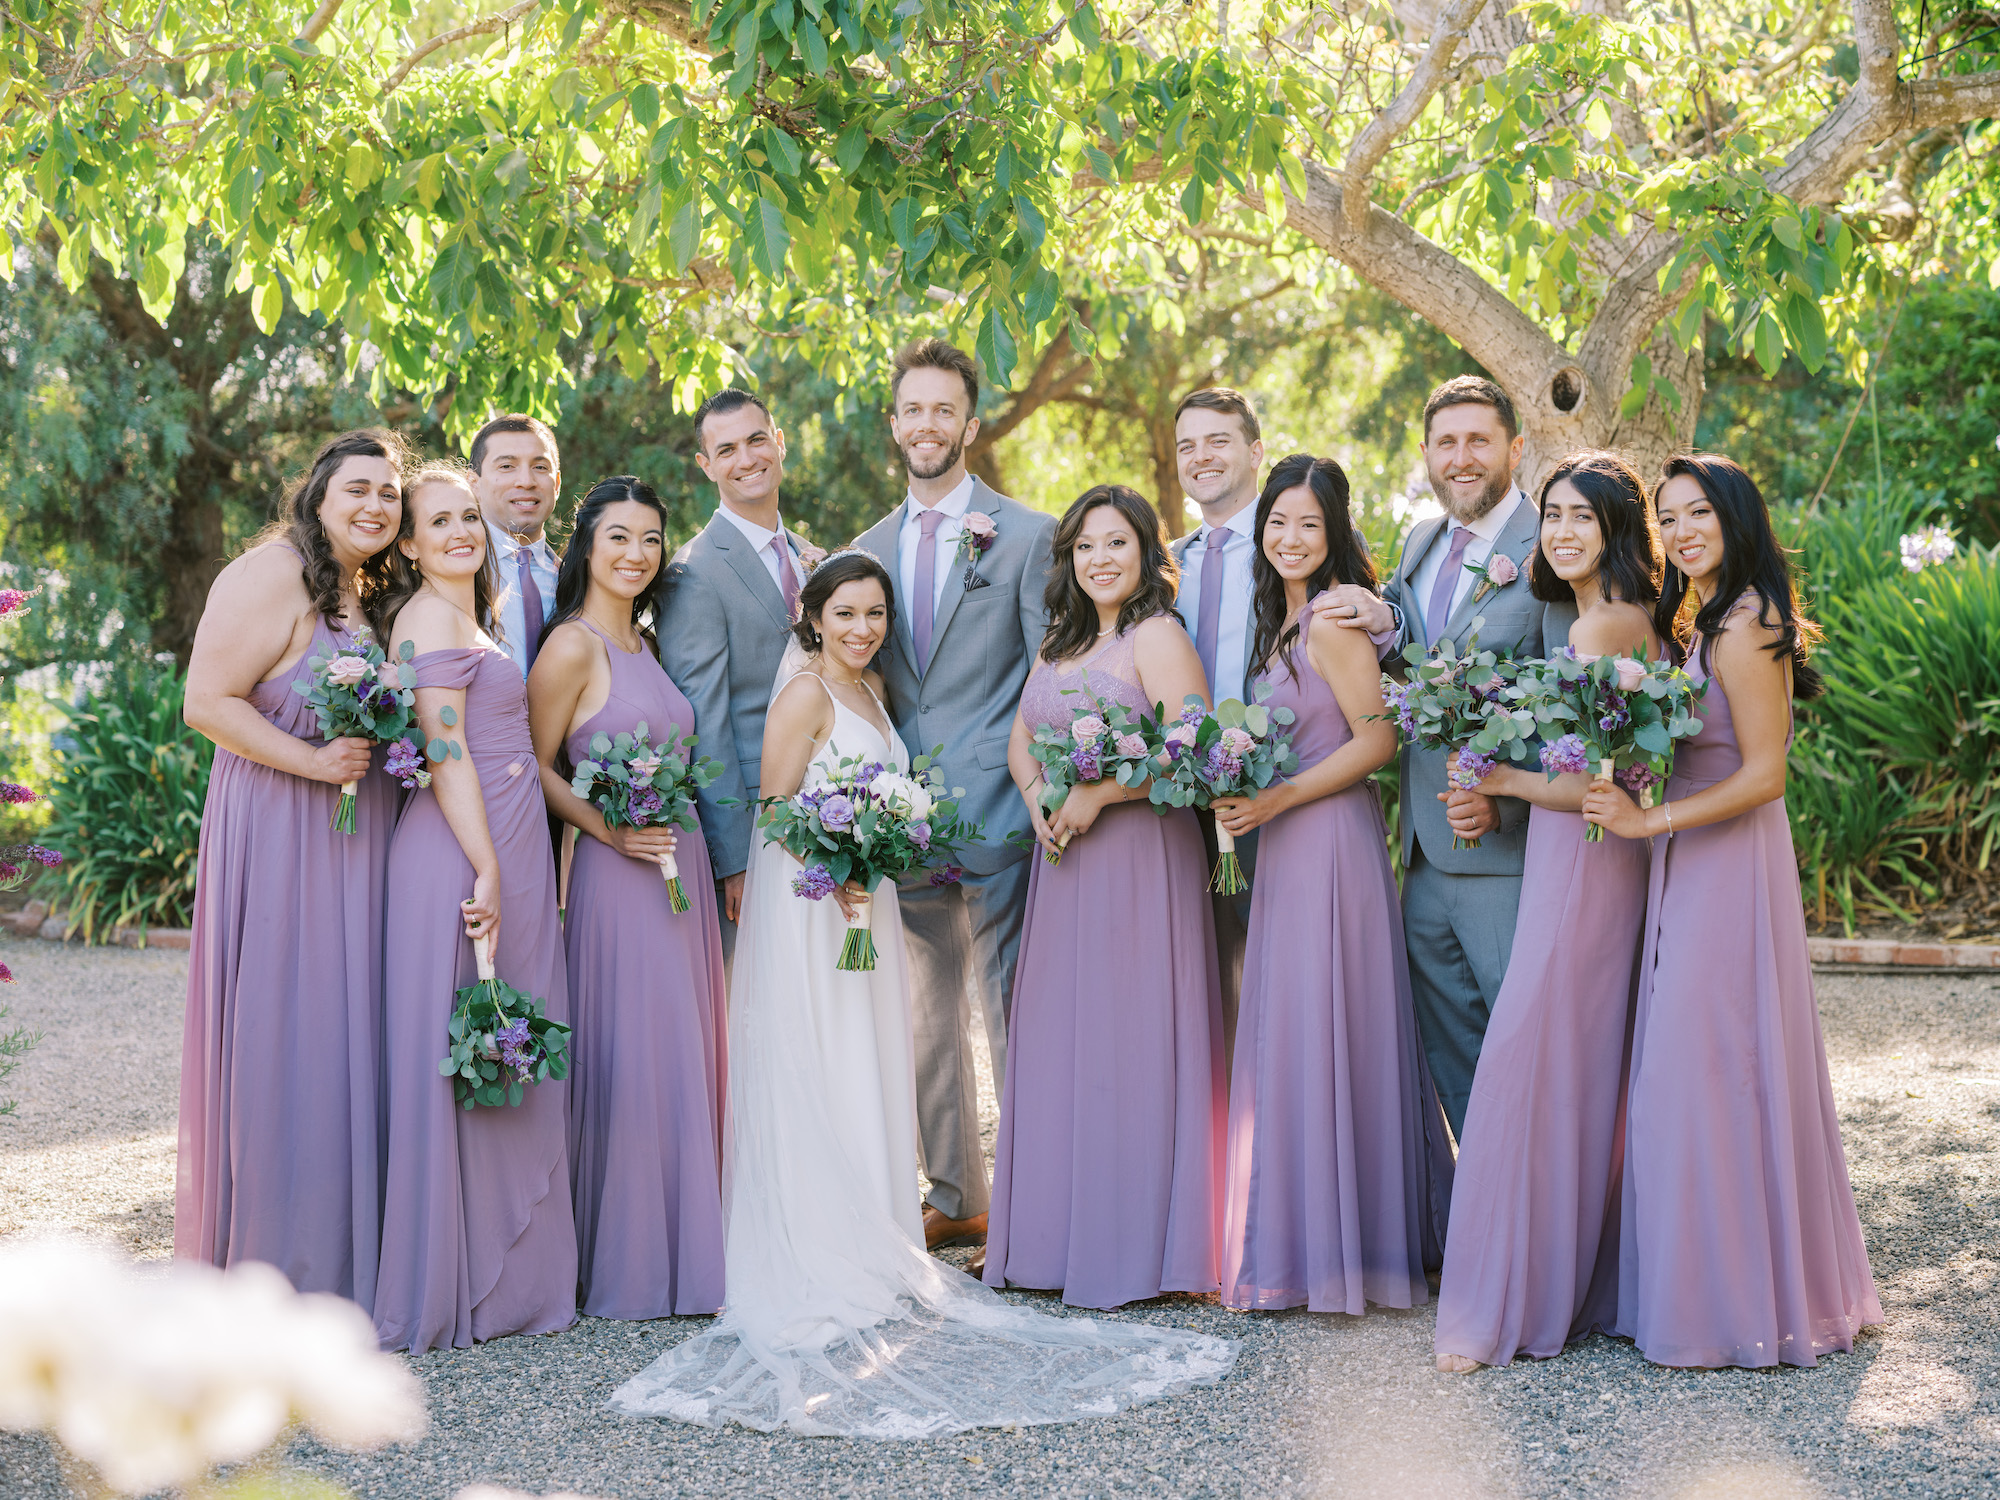 Lavender Bridal Party at Peacock Farms Wedding 2021